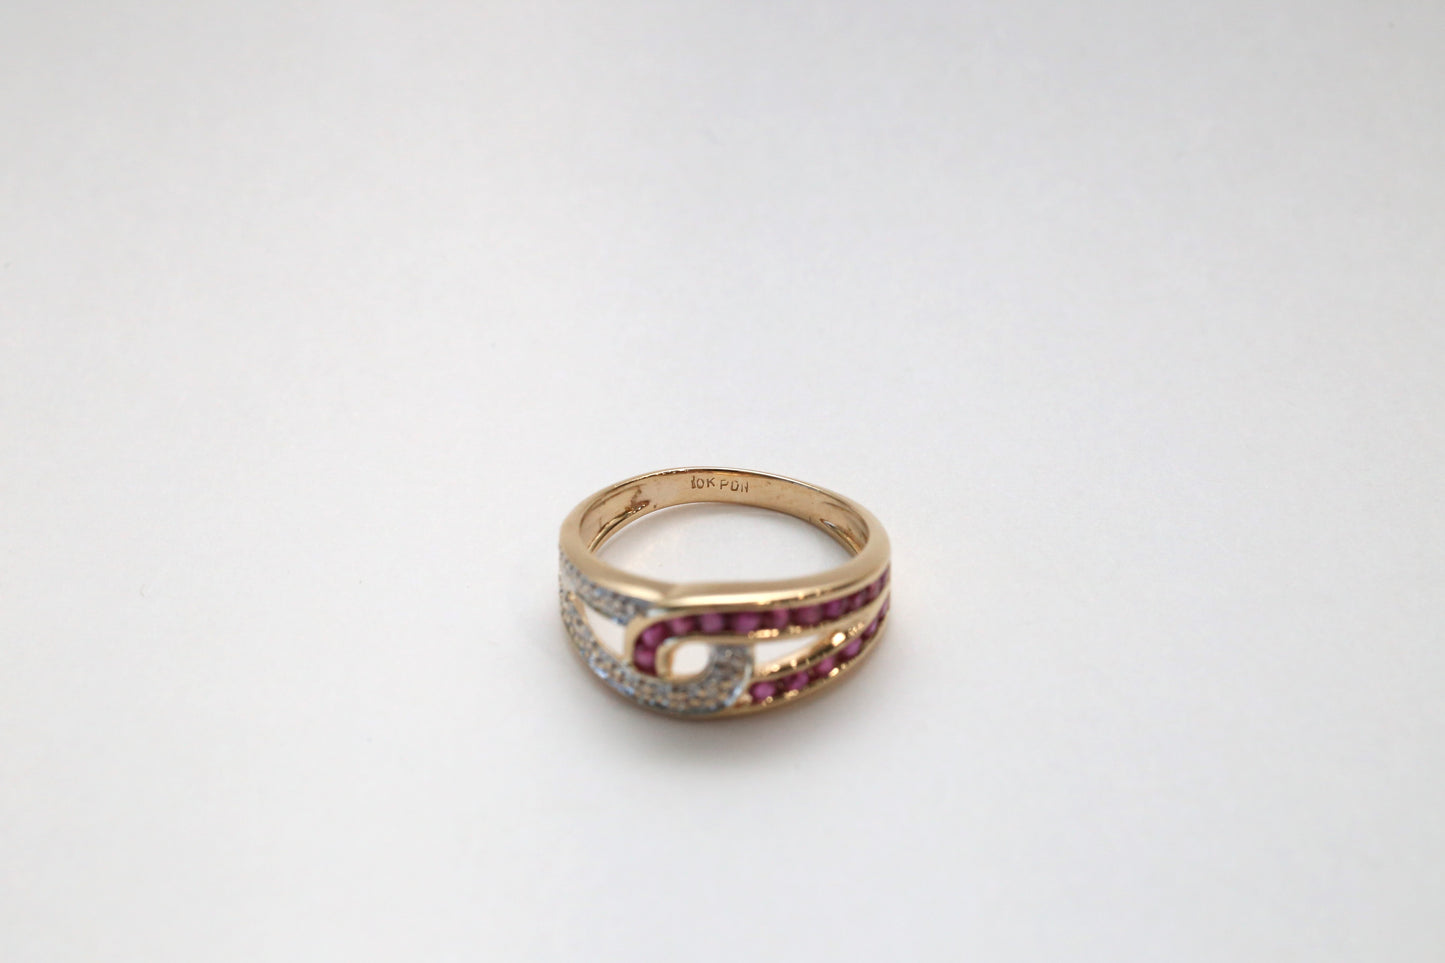 10k Yellow Gold Ruby & Diamond Ring, Size 7.25 - 2.8g